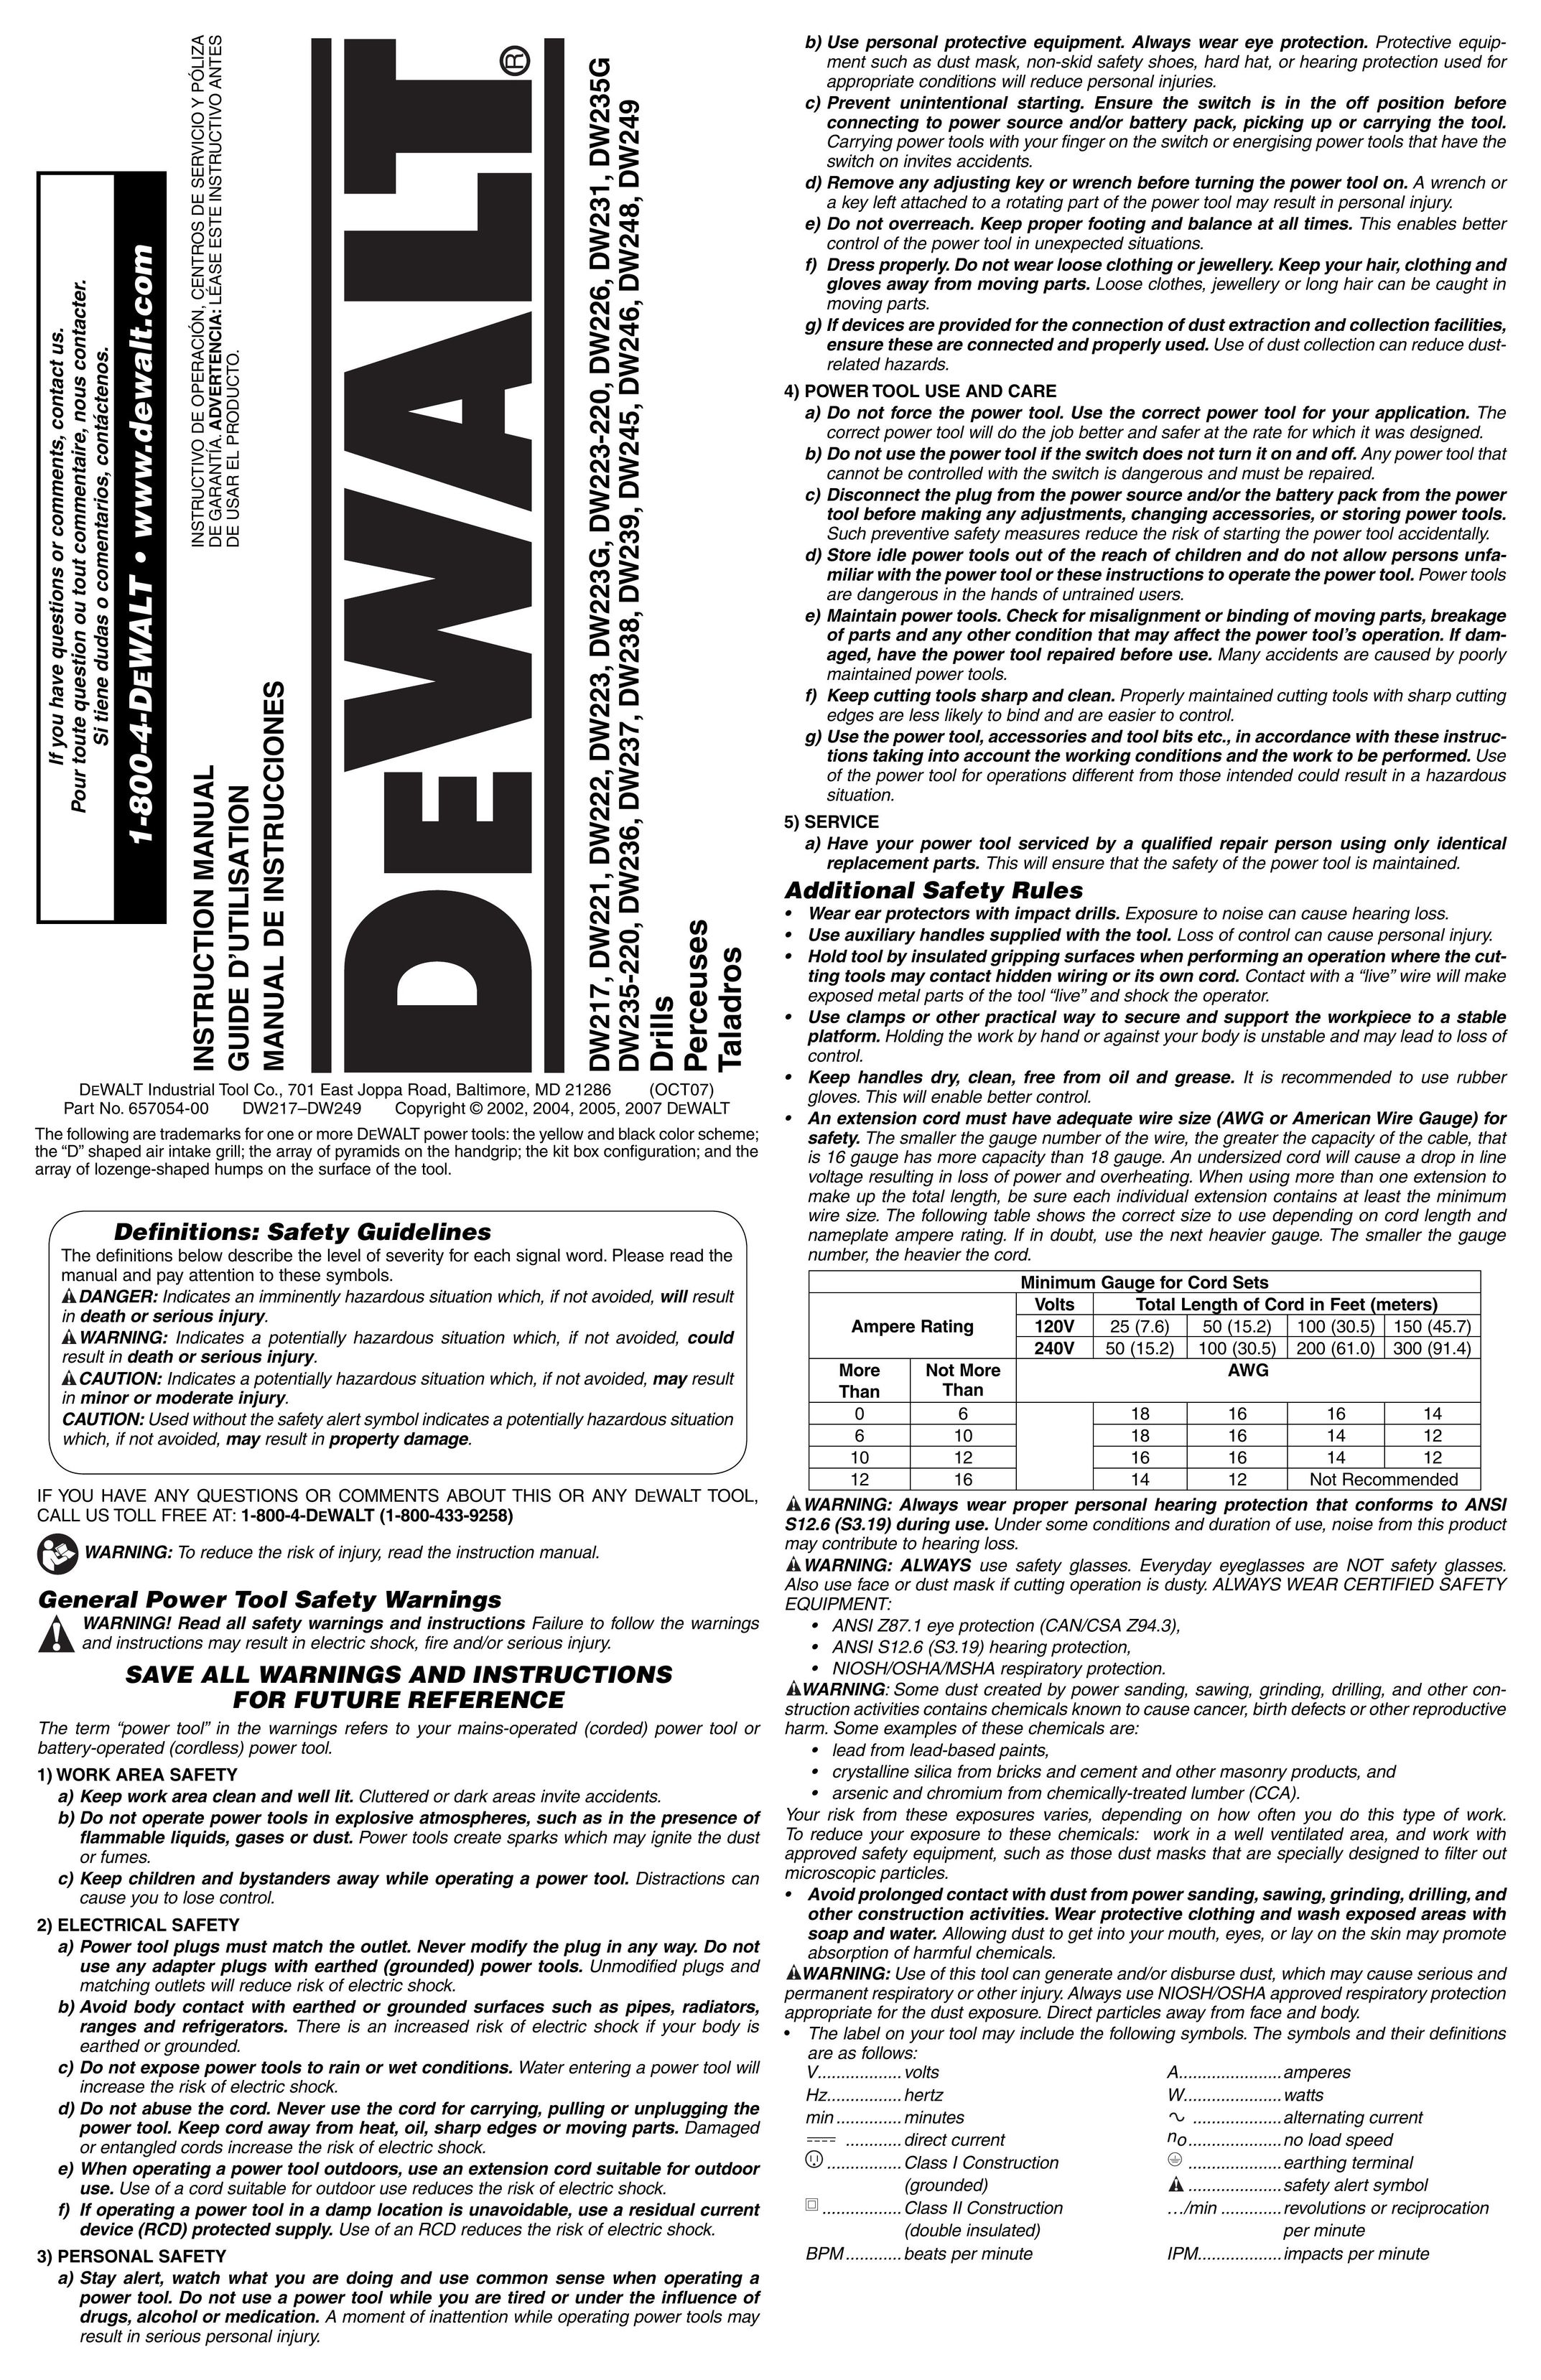 DeWalt DW239 Drill User Manual